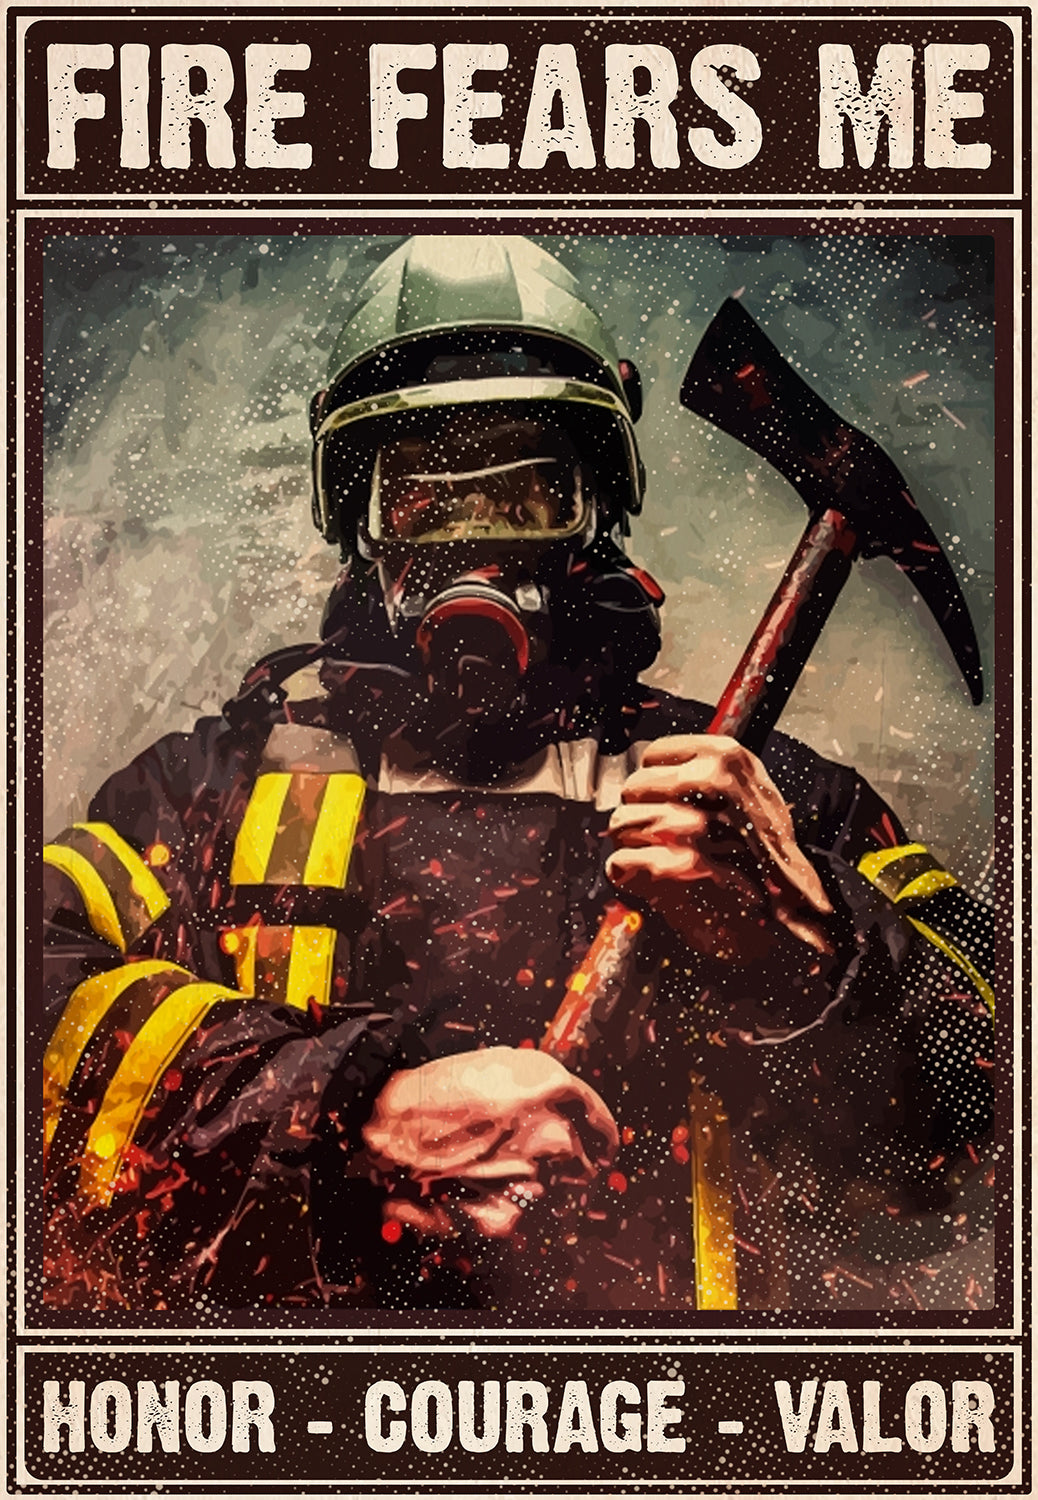 Firefighter Fire Sleketon Art Fire Fears Me Firefighting For Halloween-MH0908